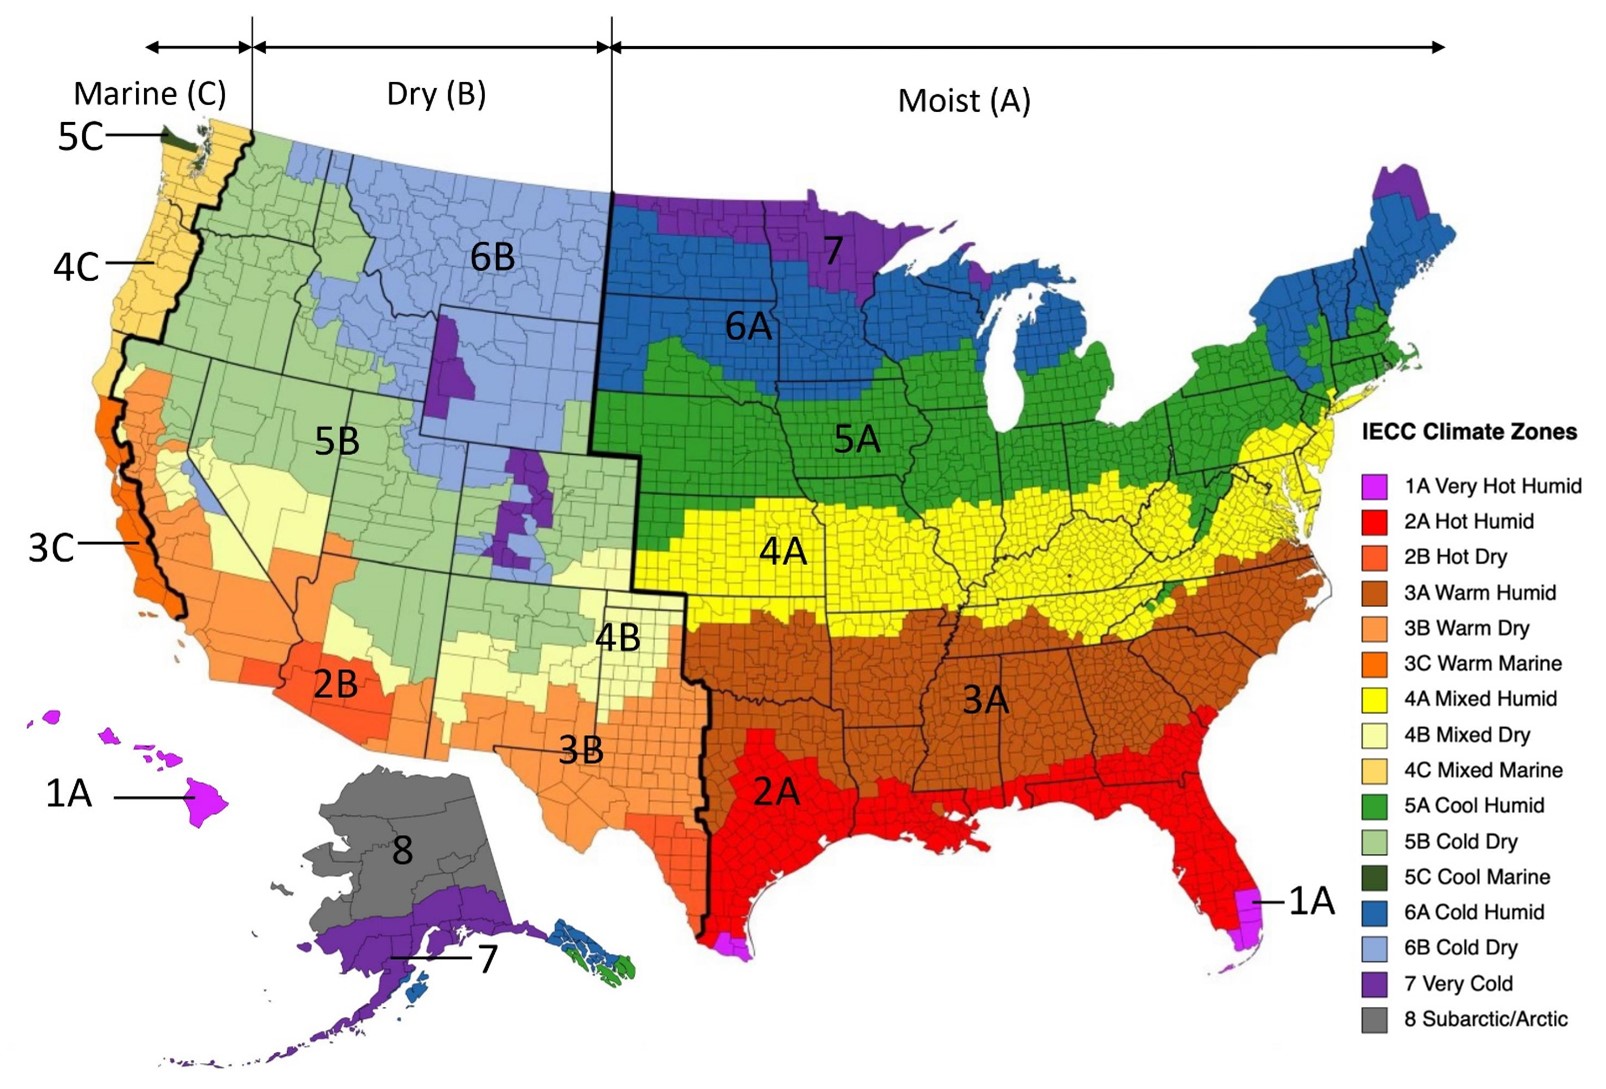 Attic ceiling insulation map for US zones 1-8